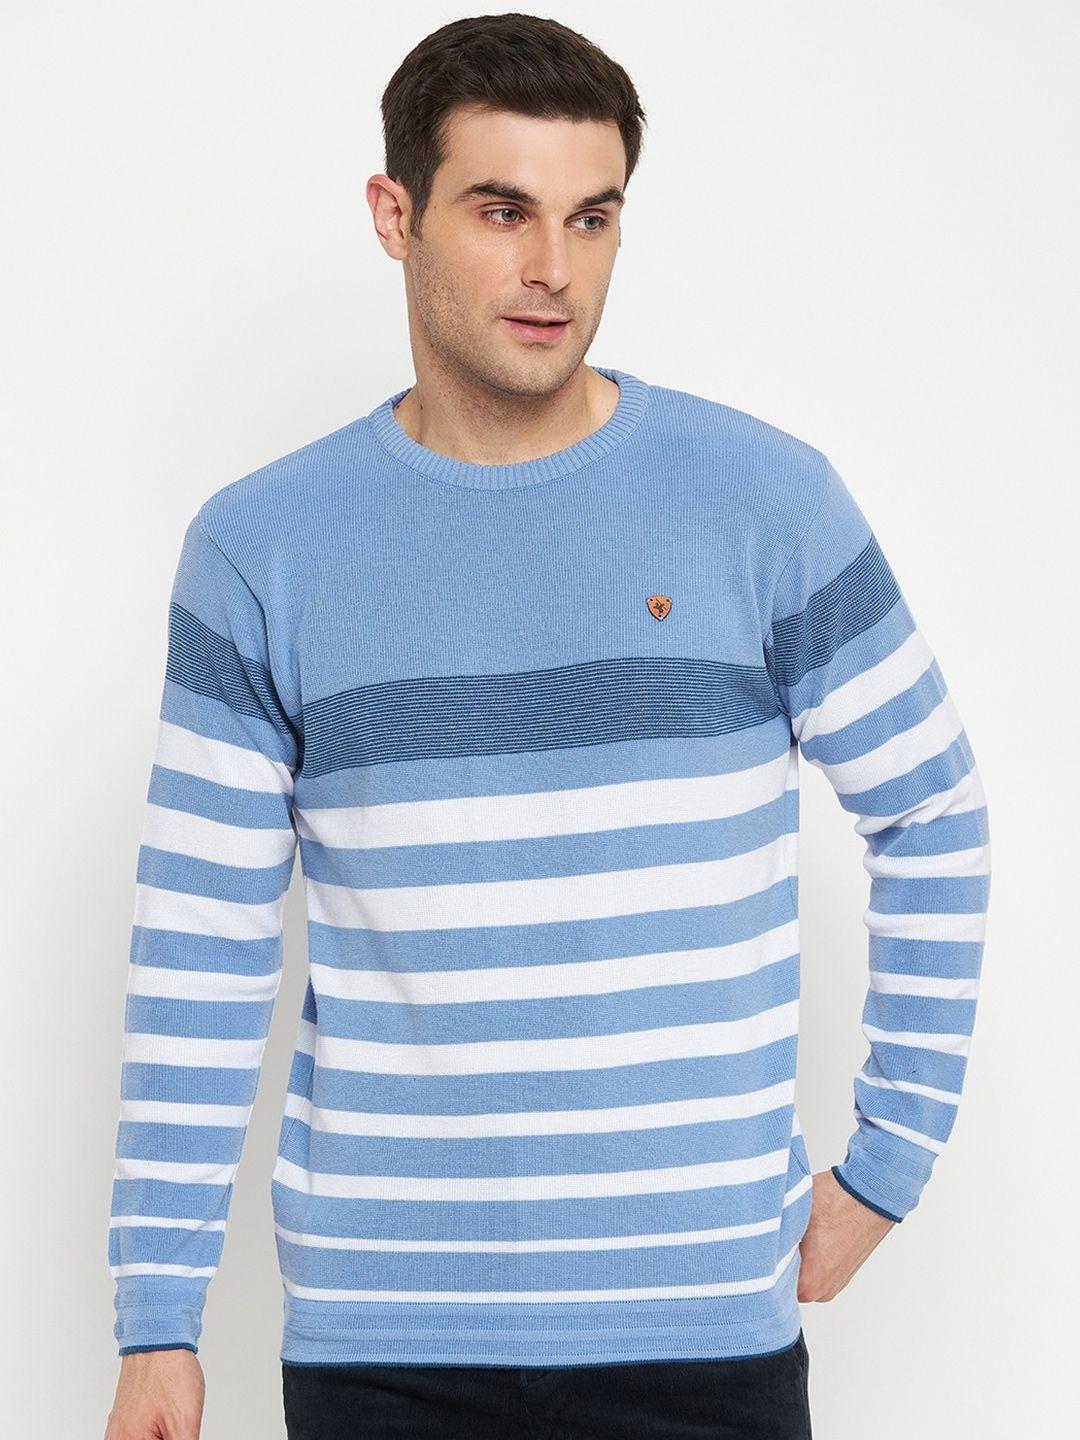 cantabil-striped-cotton-pullover-sweater